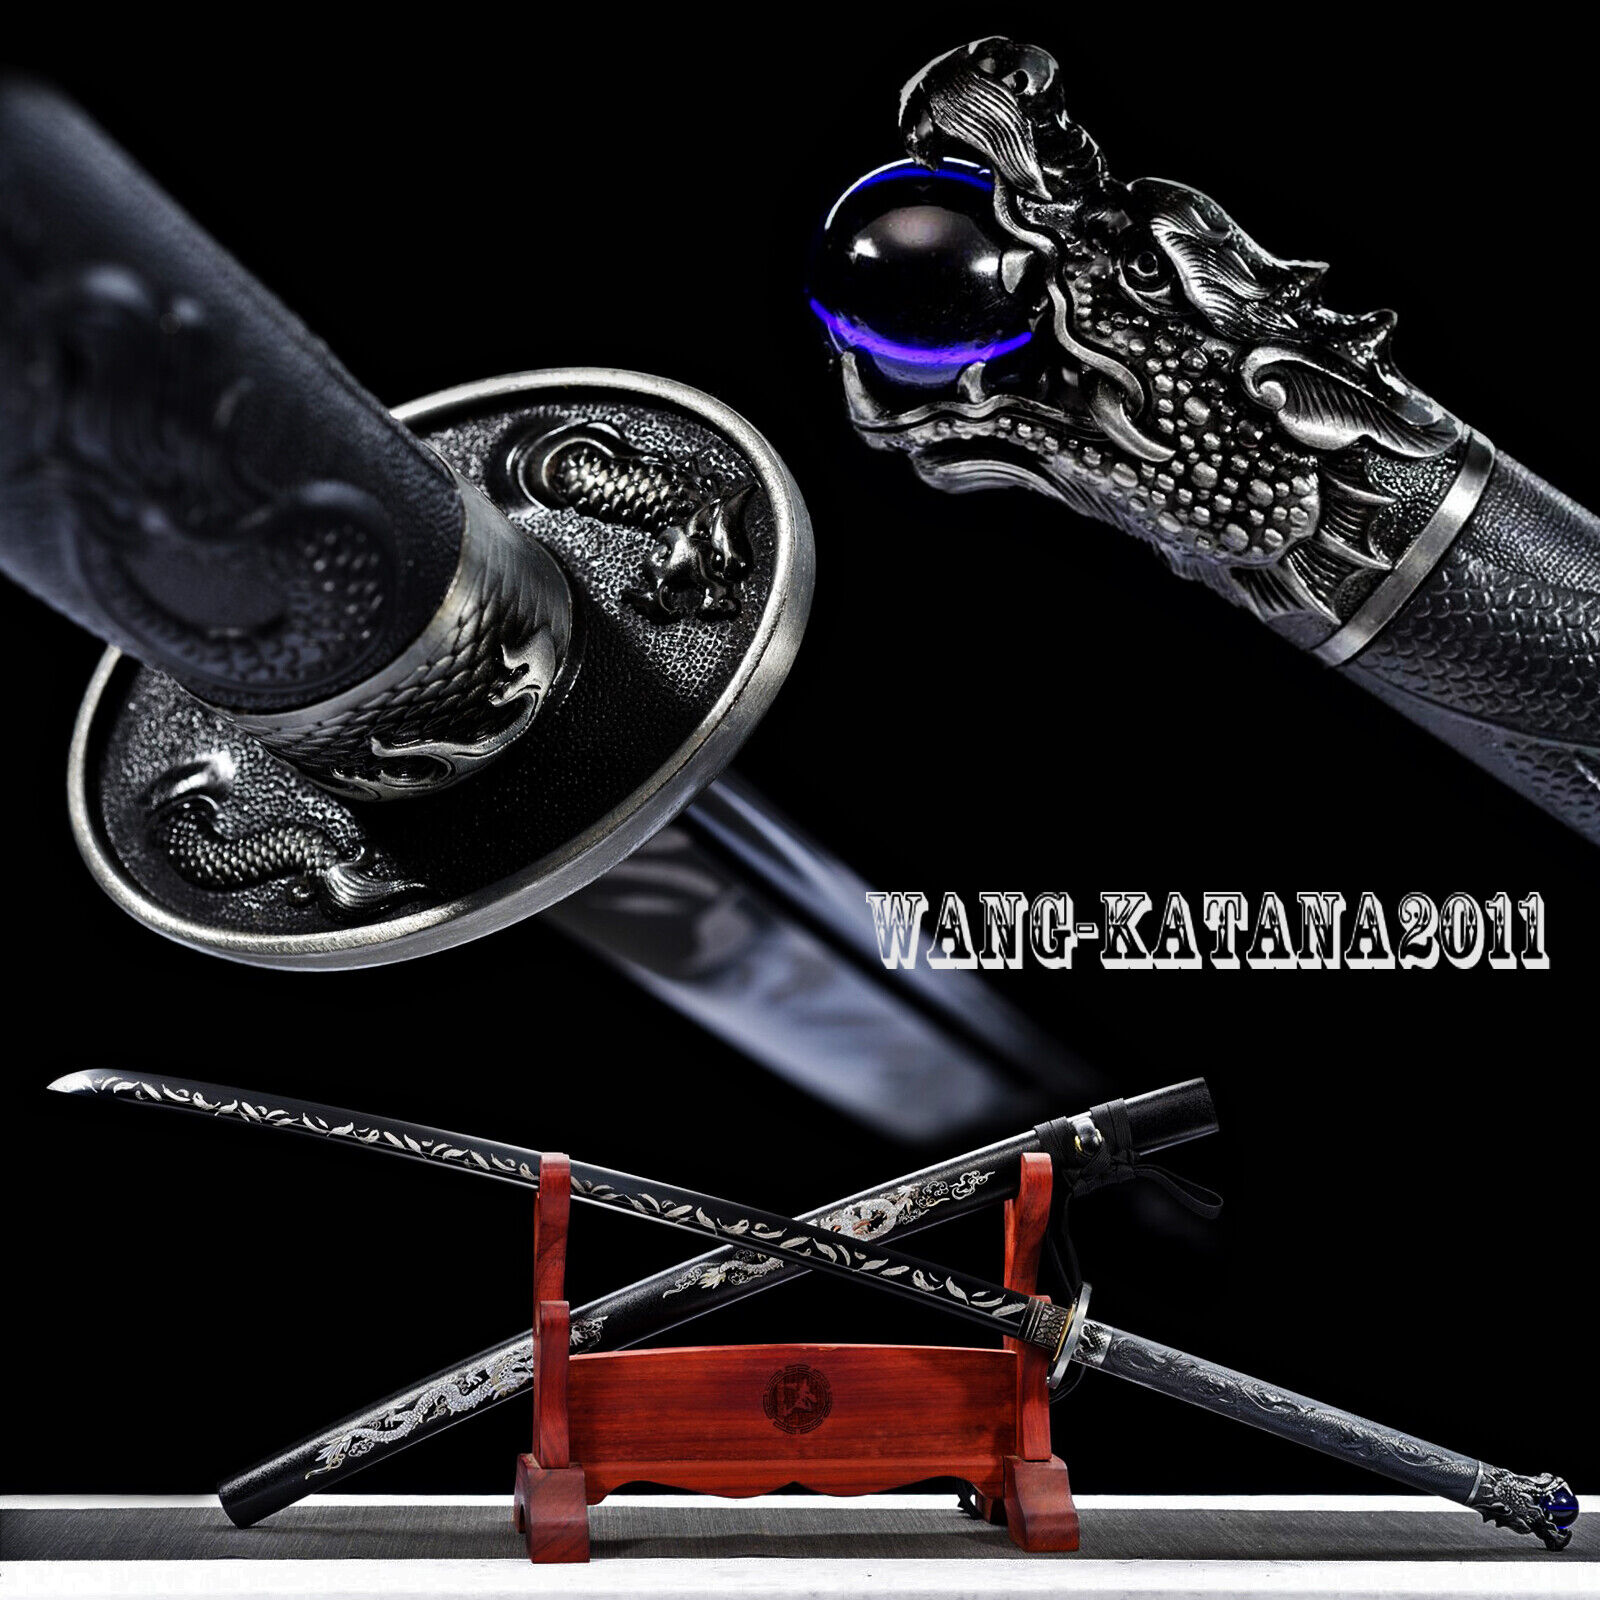 Black Dragon Extended Katana 1095 Battle Ready Japanese Samurai Functional Sword